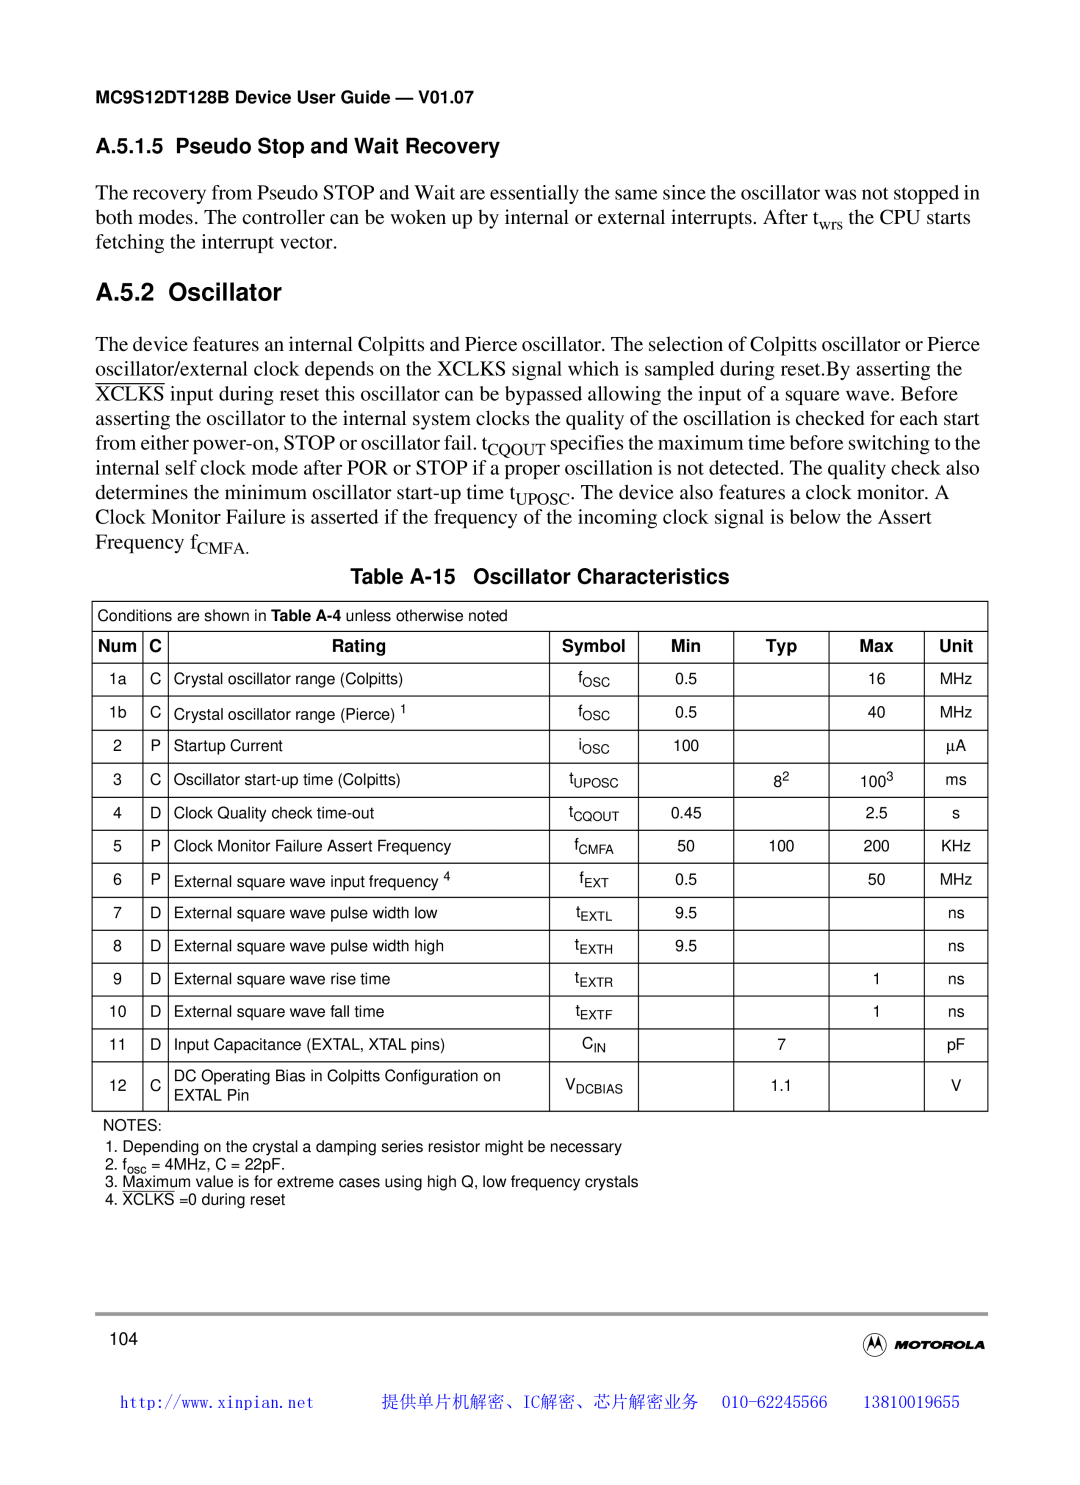 Motorola MC9S12DT128B manual A.5.2 Oscillator, A.5.1.5 Pseudo Stop and Wait Recovery, Table A-15 Oscillator Characteristics 